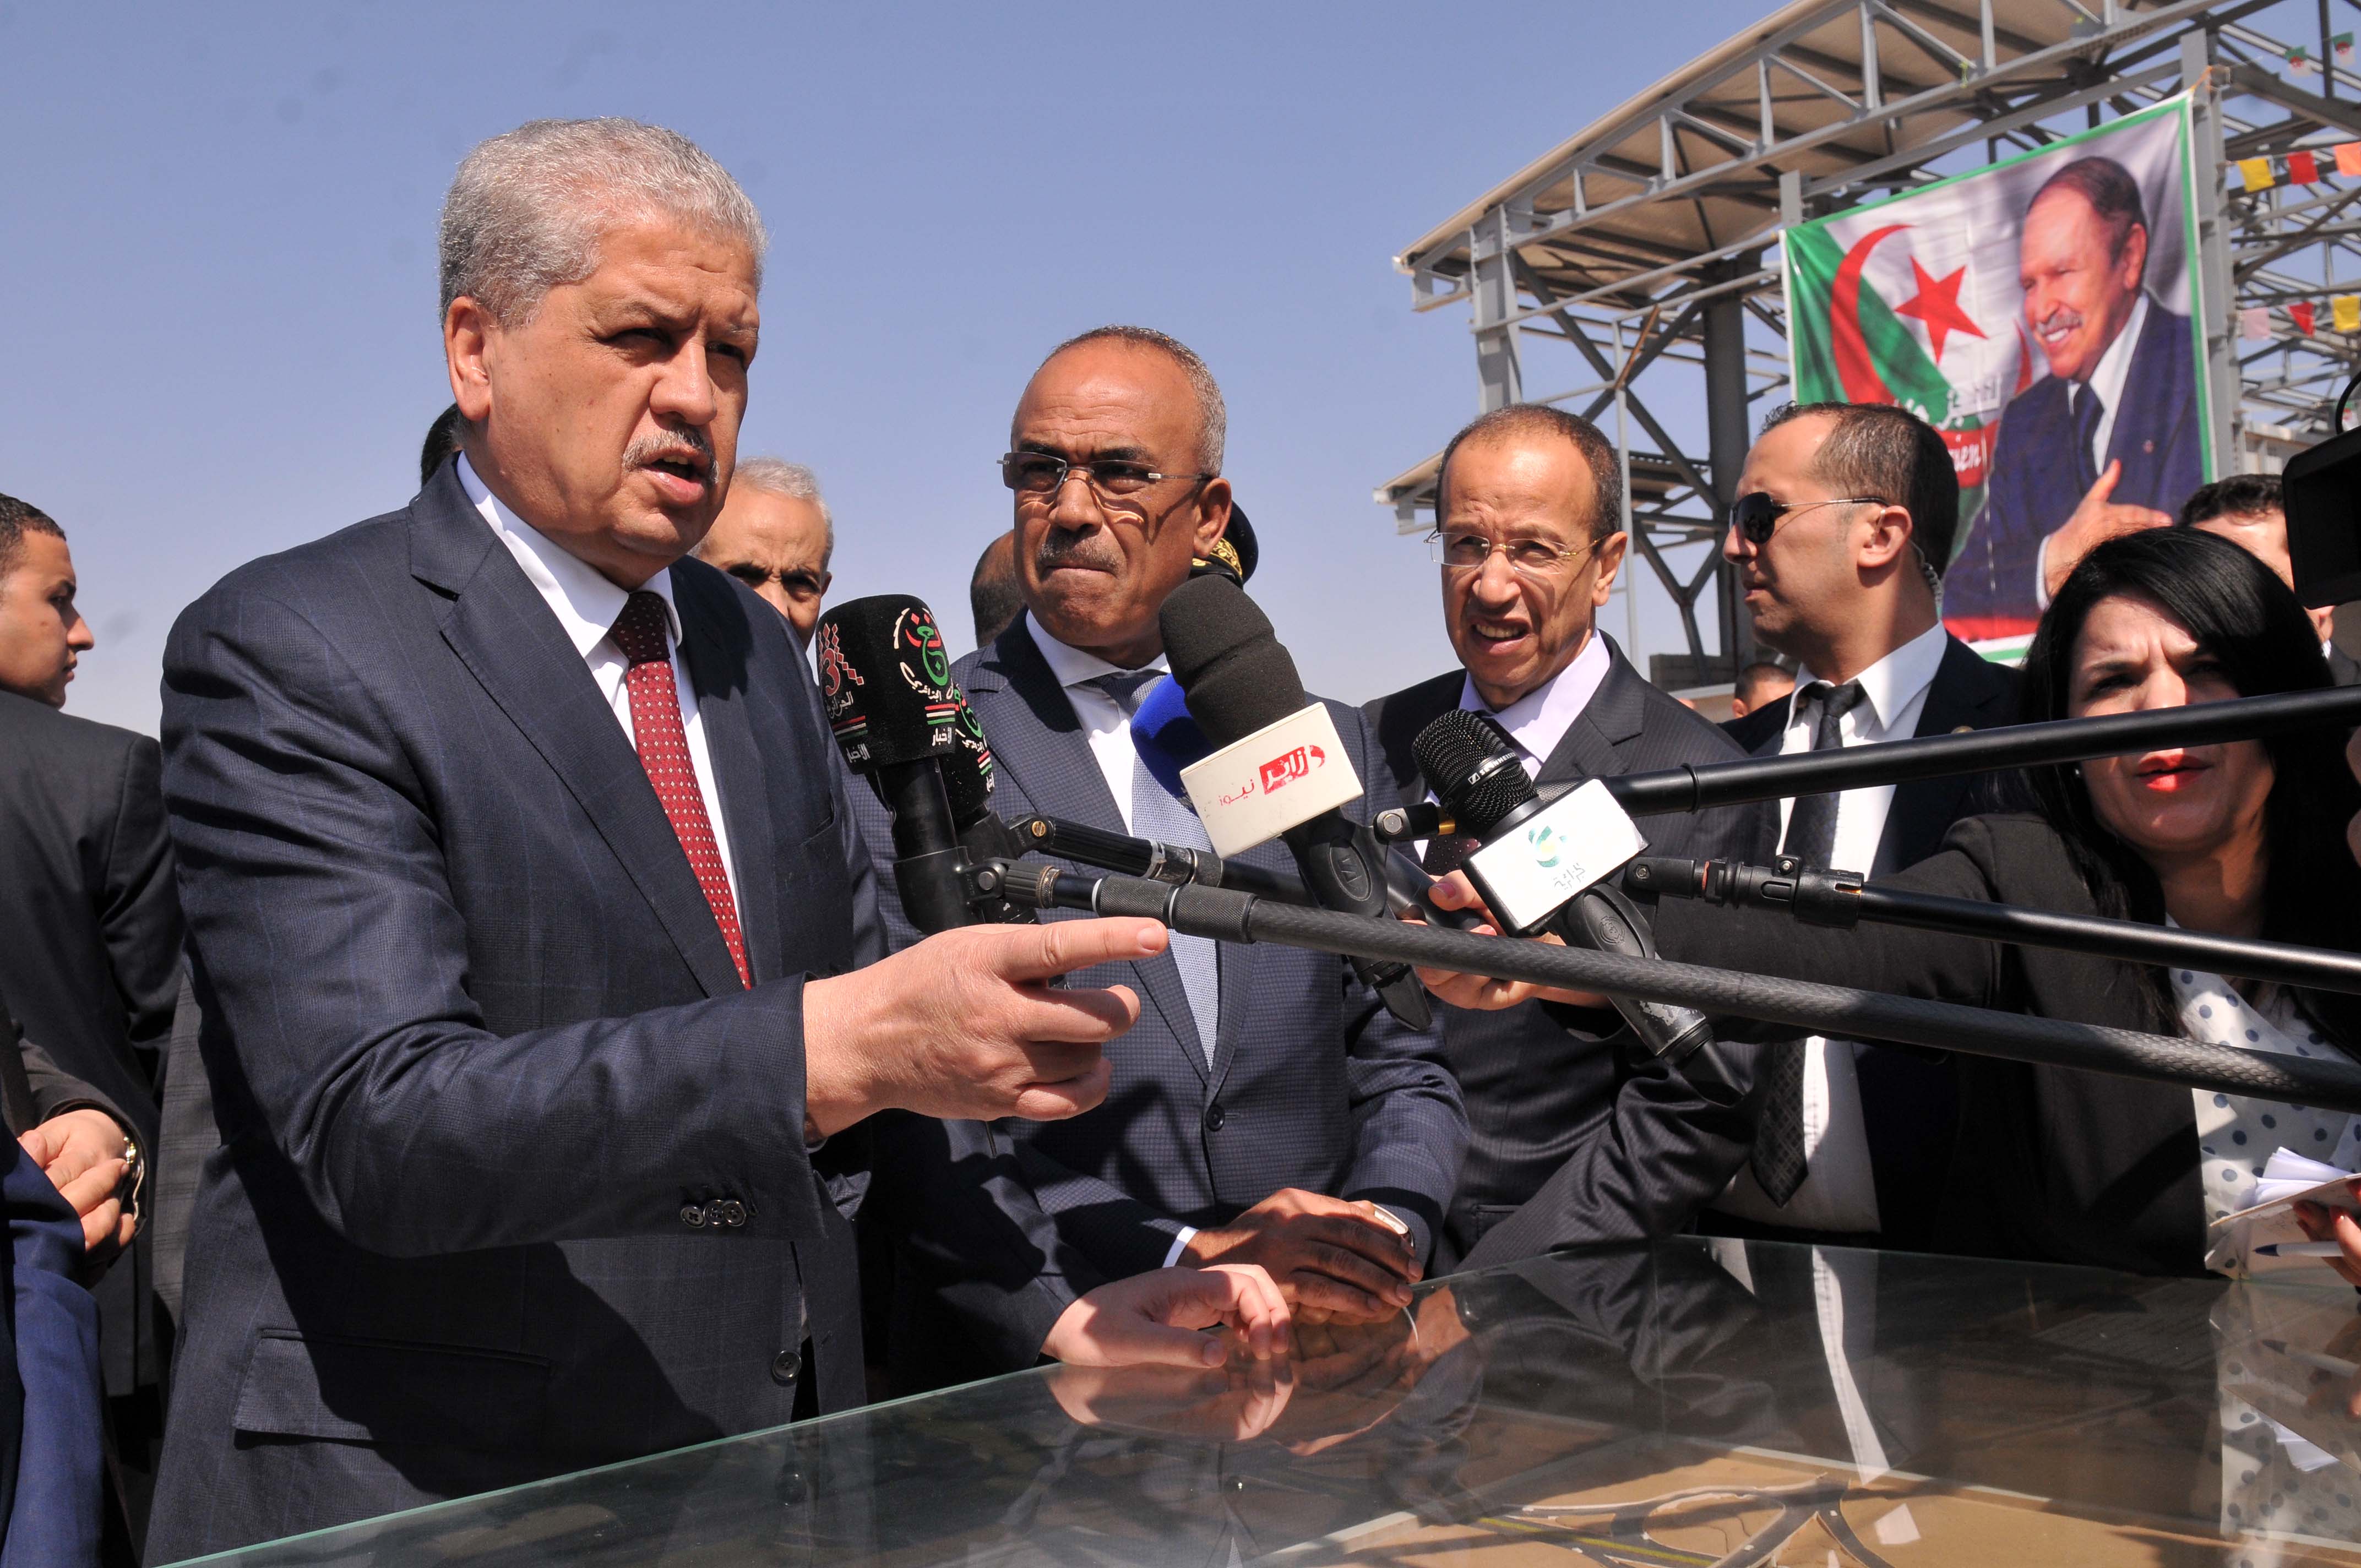 Le Premier ministre Abdelmalek Sellal dernièrement à Djelfa. New Press